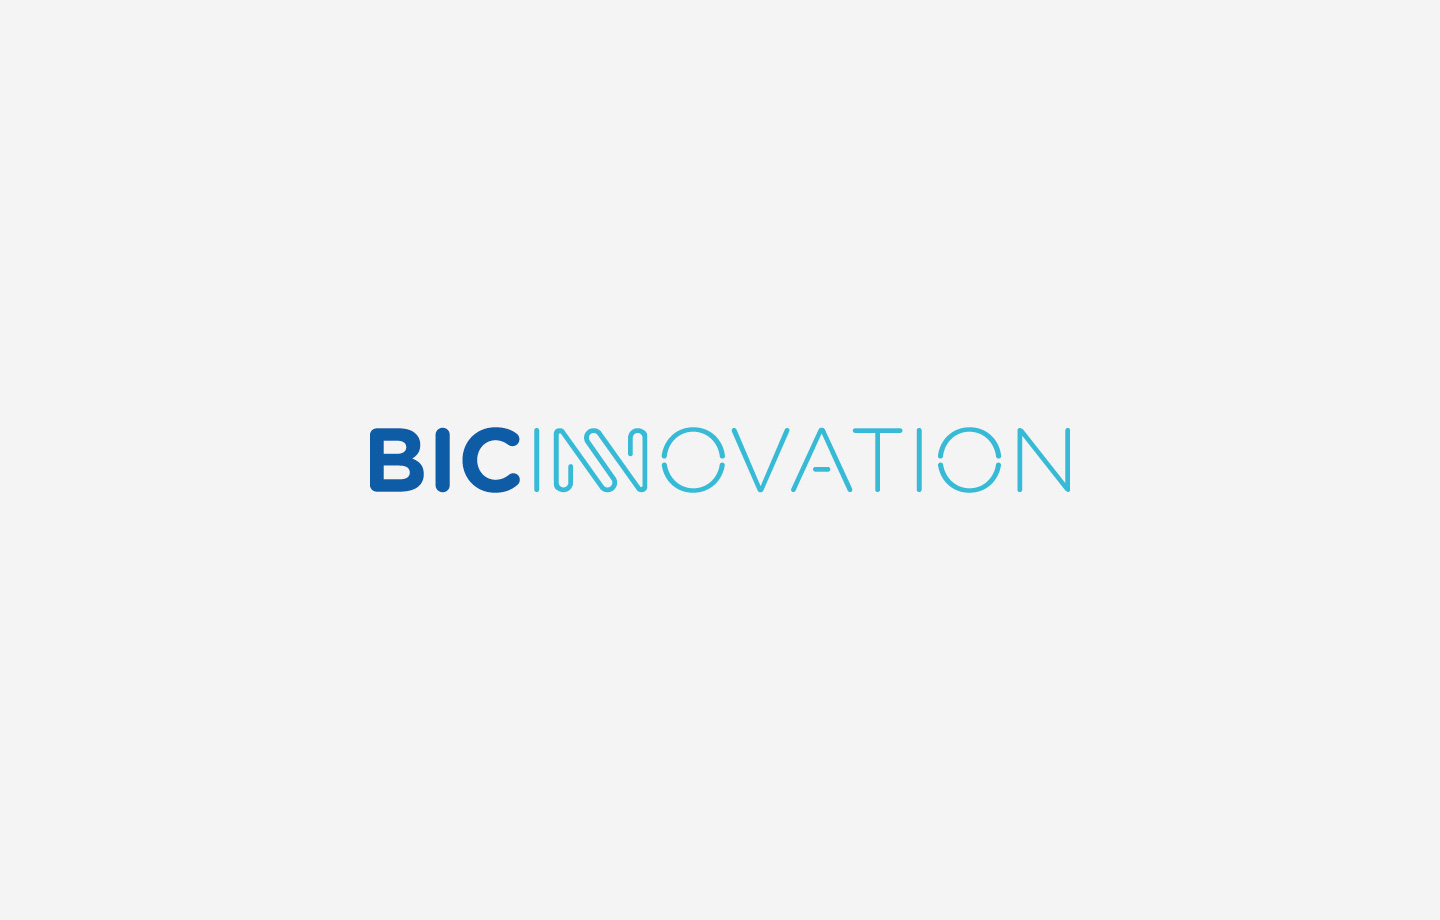 BIC Innovation